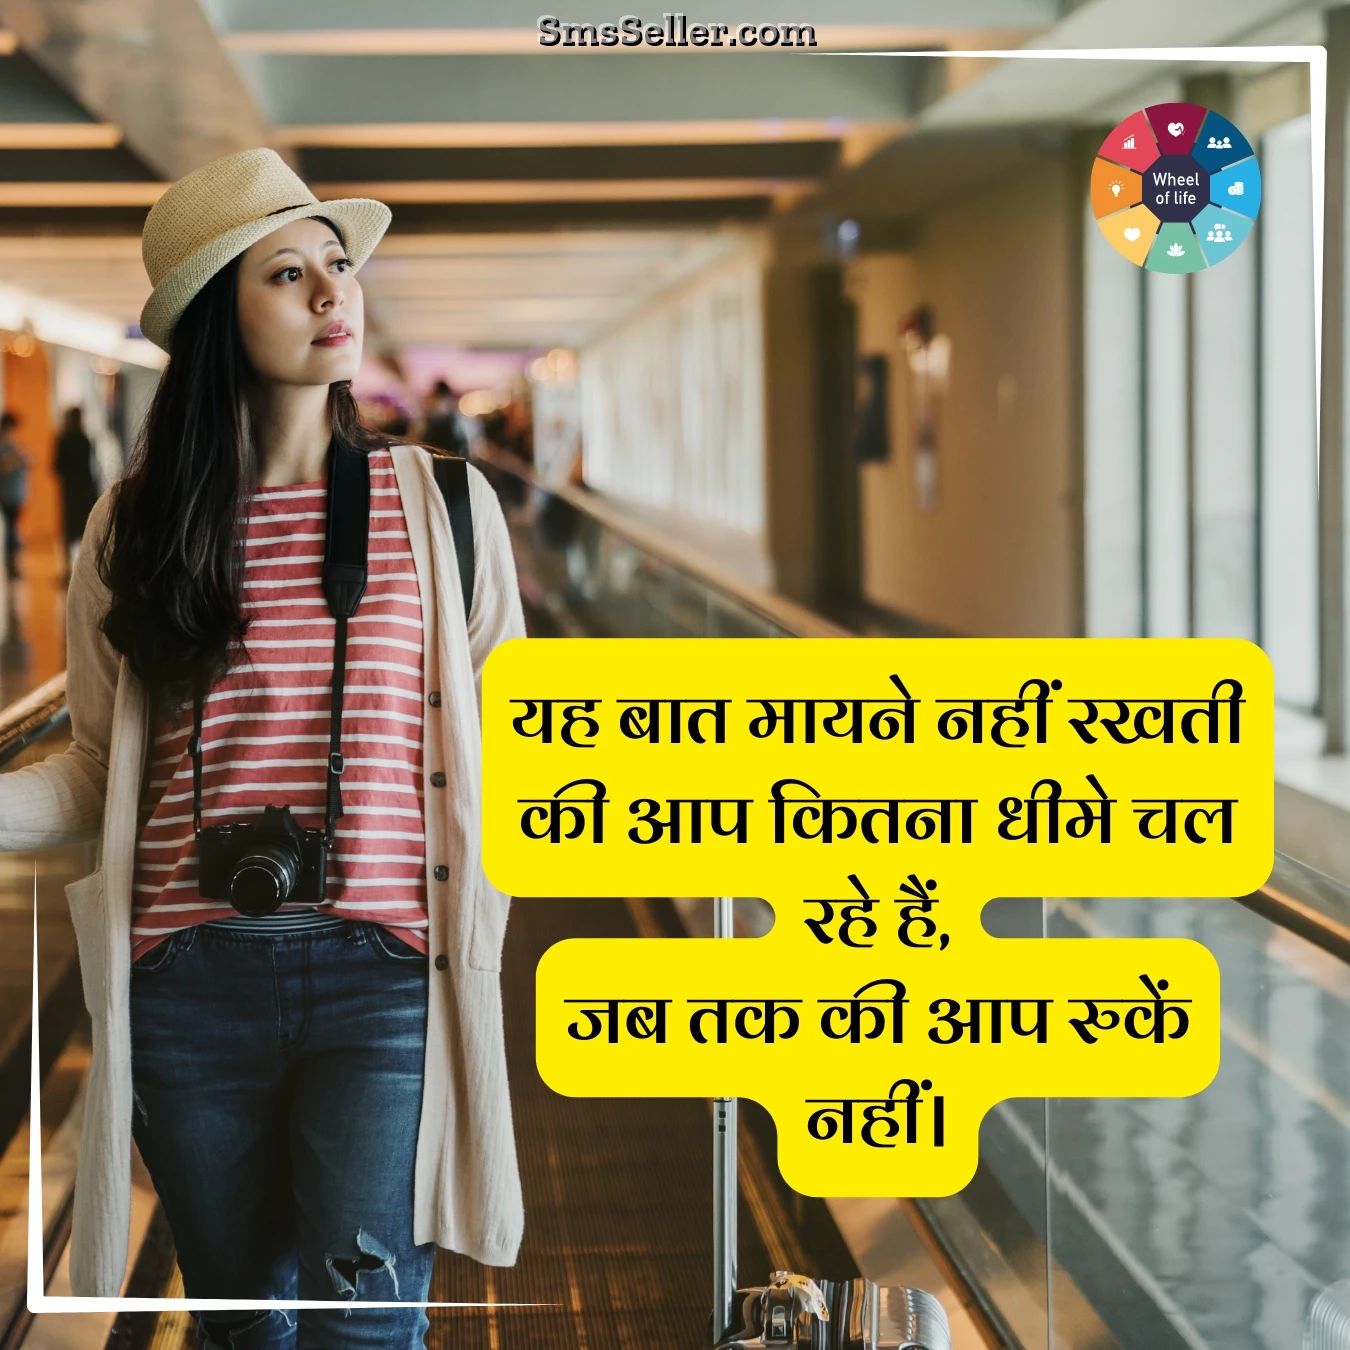 life quotes in hindi maayane nahin manjil ka safar